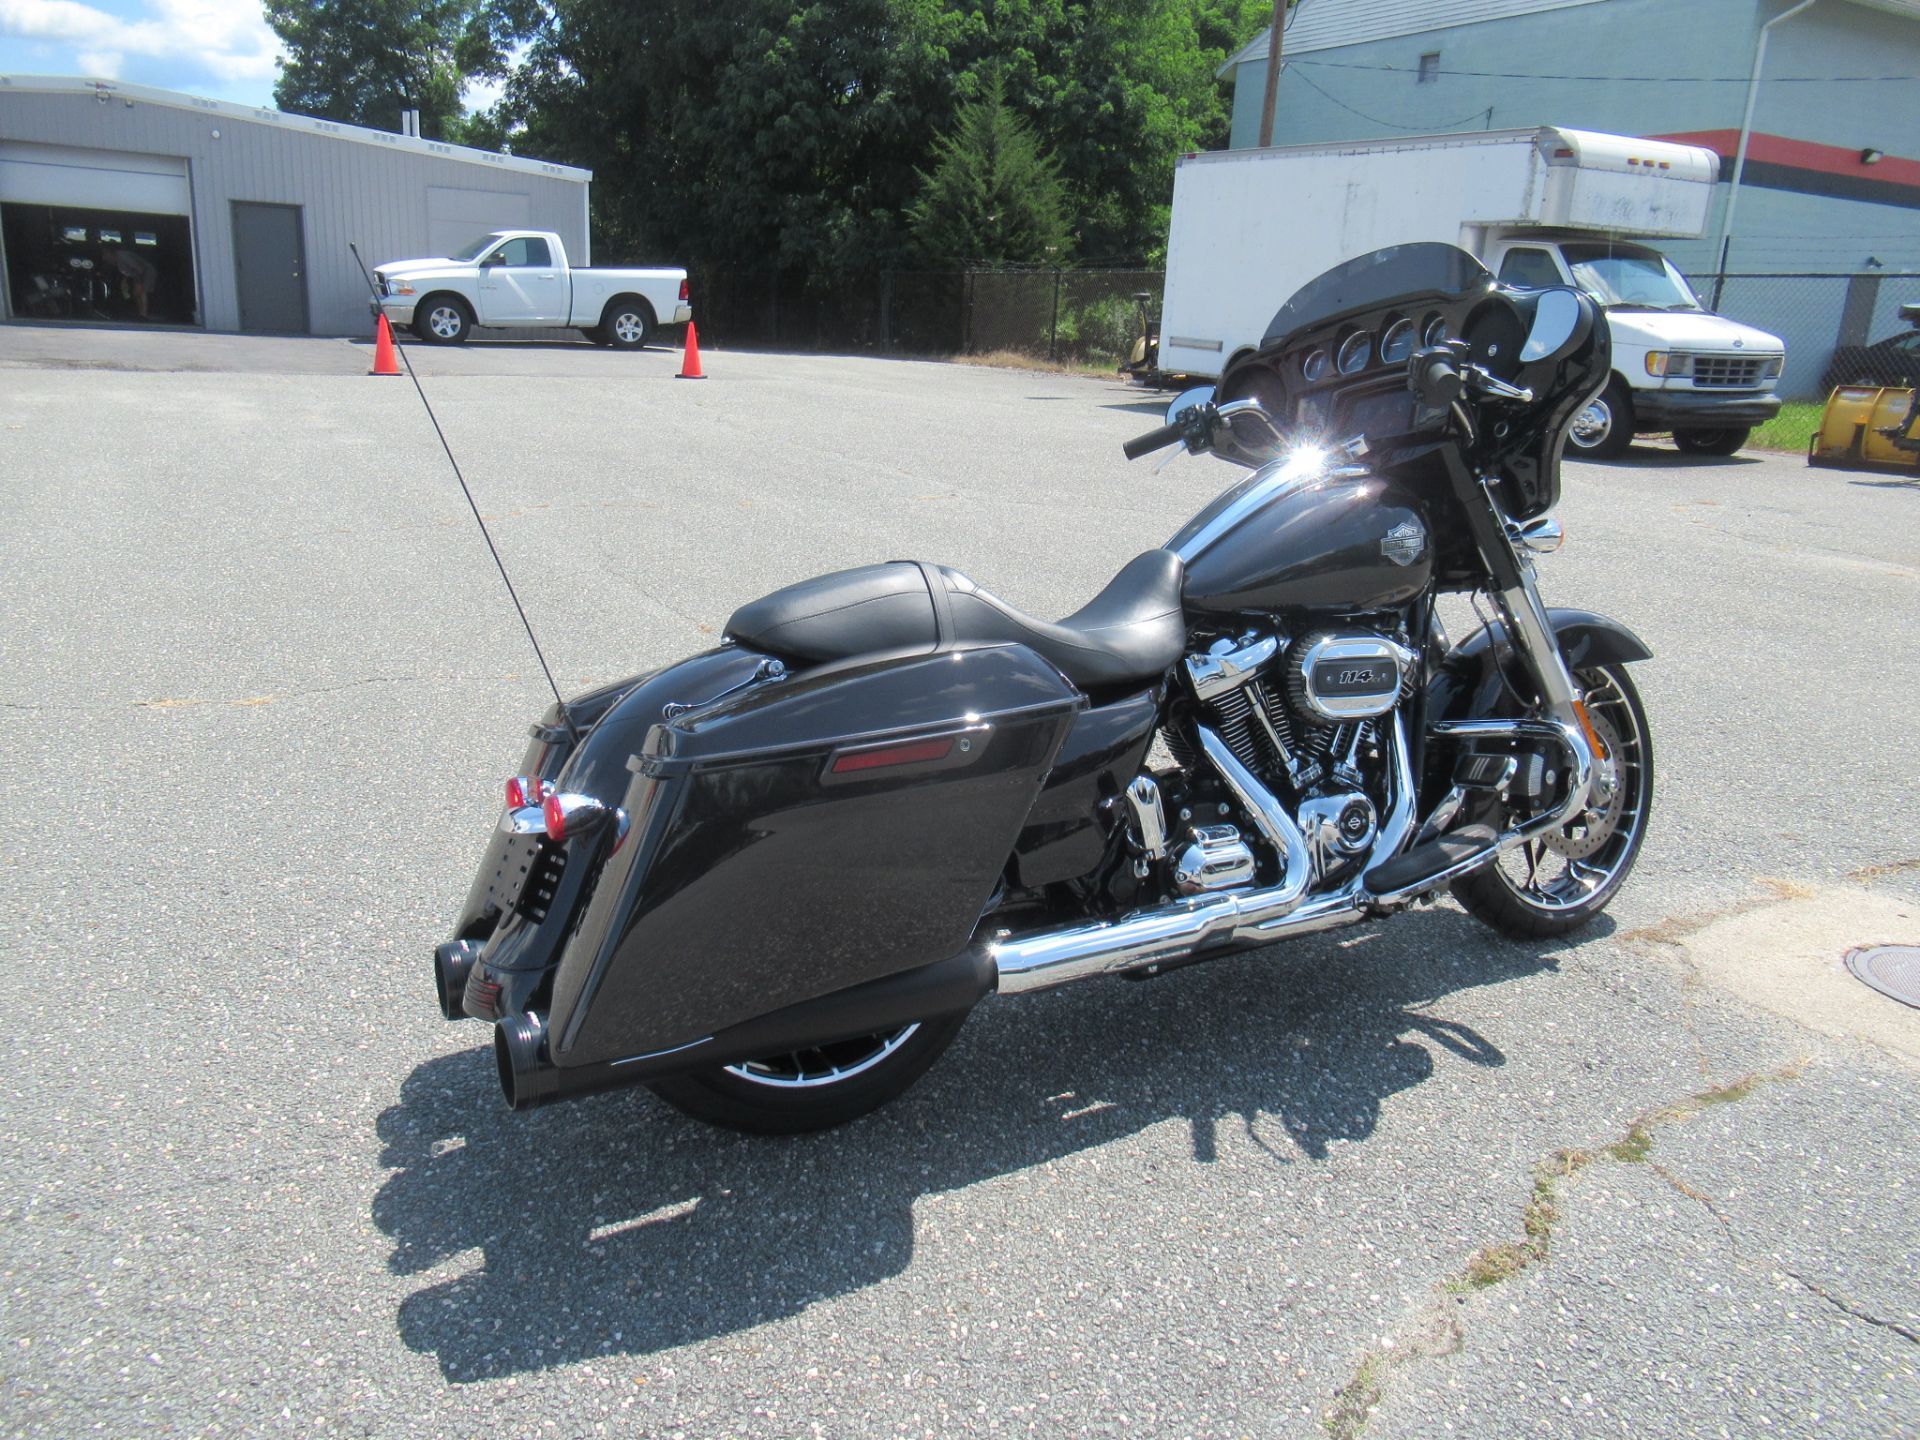 2021 Harley-Davidson Street Glide® Special in Springfield, Massachusetts - Photo 2